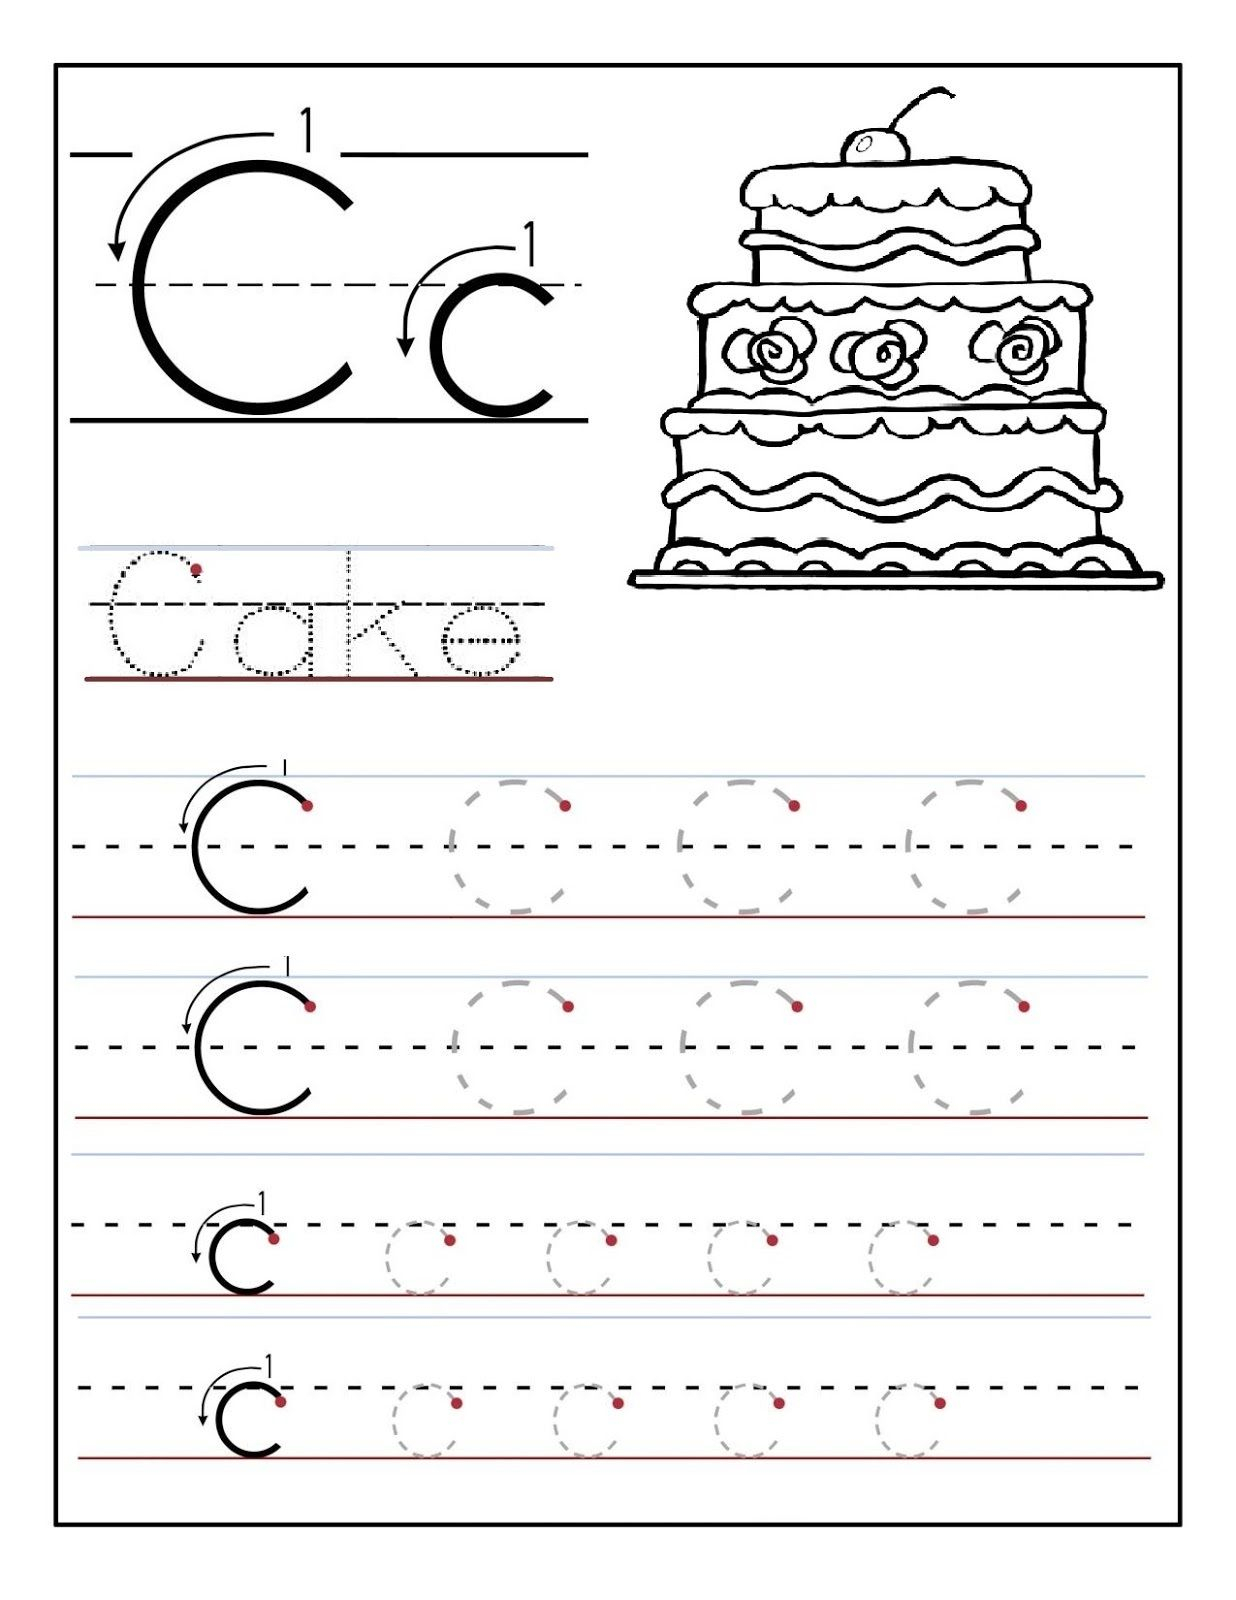 Kids Learning Sheets Printable | K5 Worksheets | Preschool within Alphabet Worksheets K5